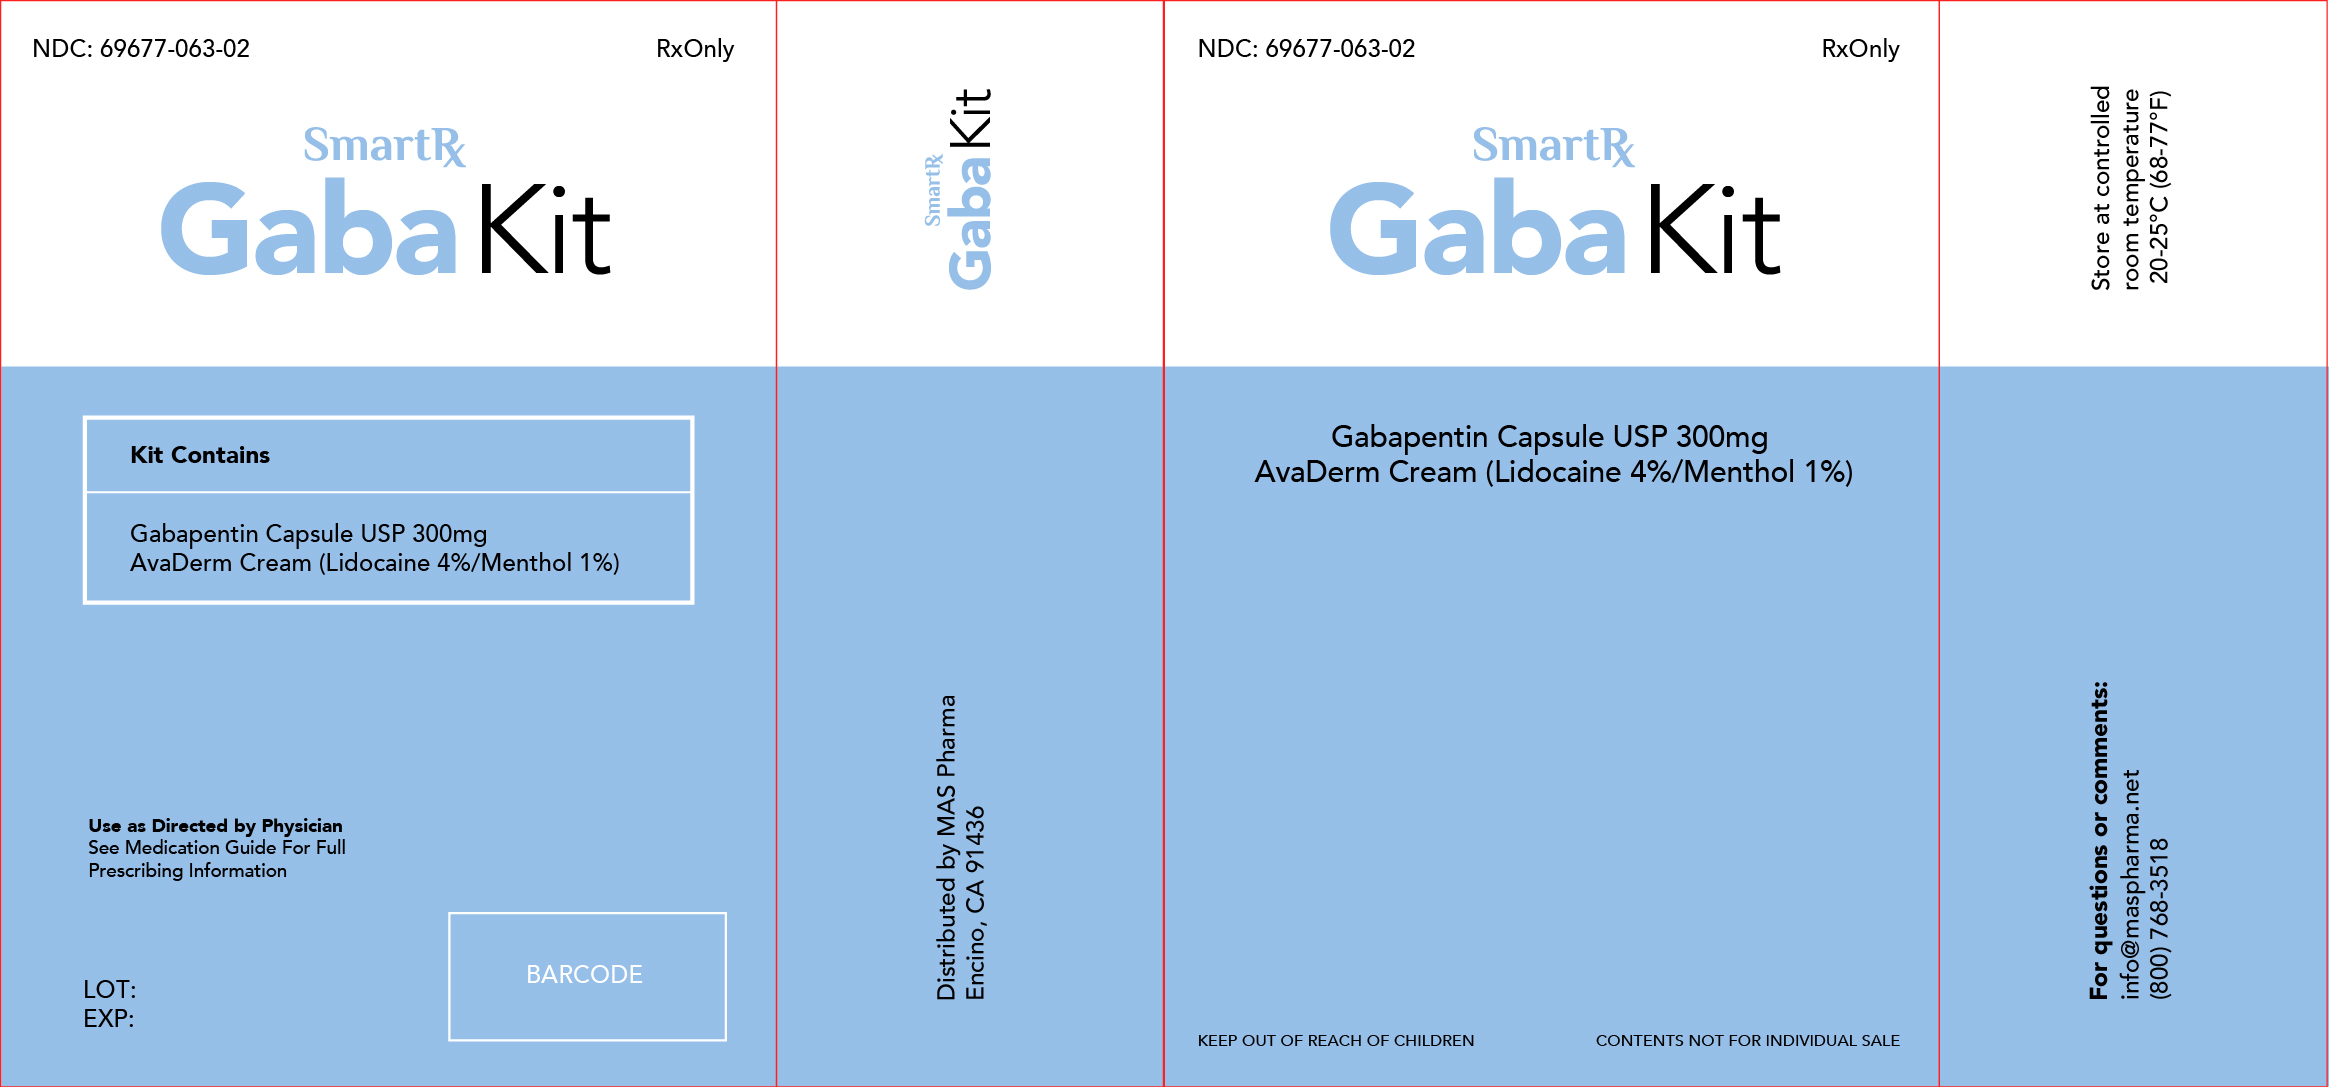 SmartRx Gaba Kit